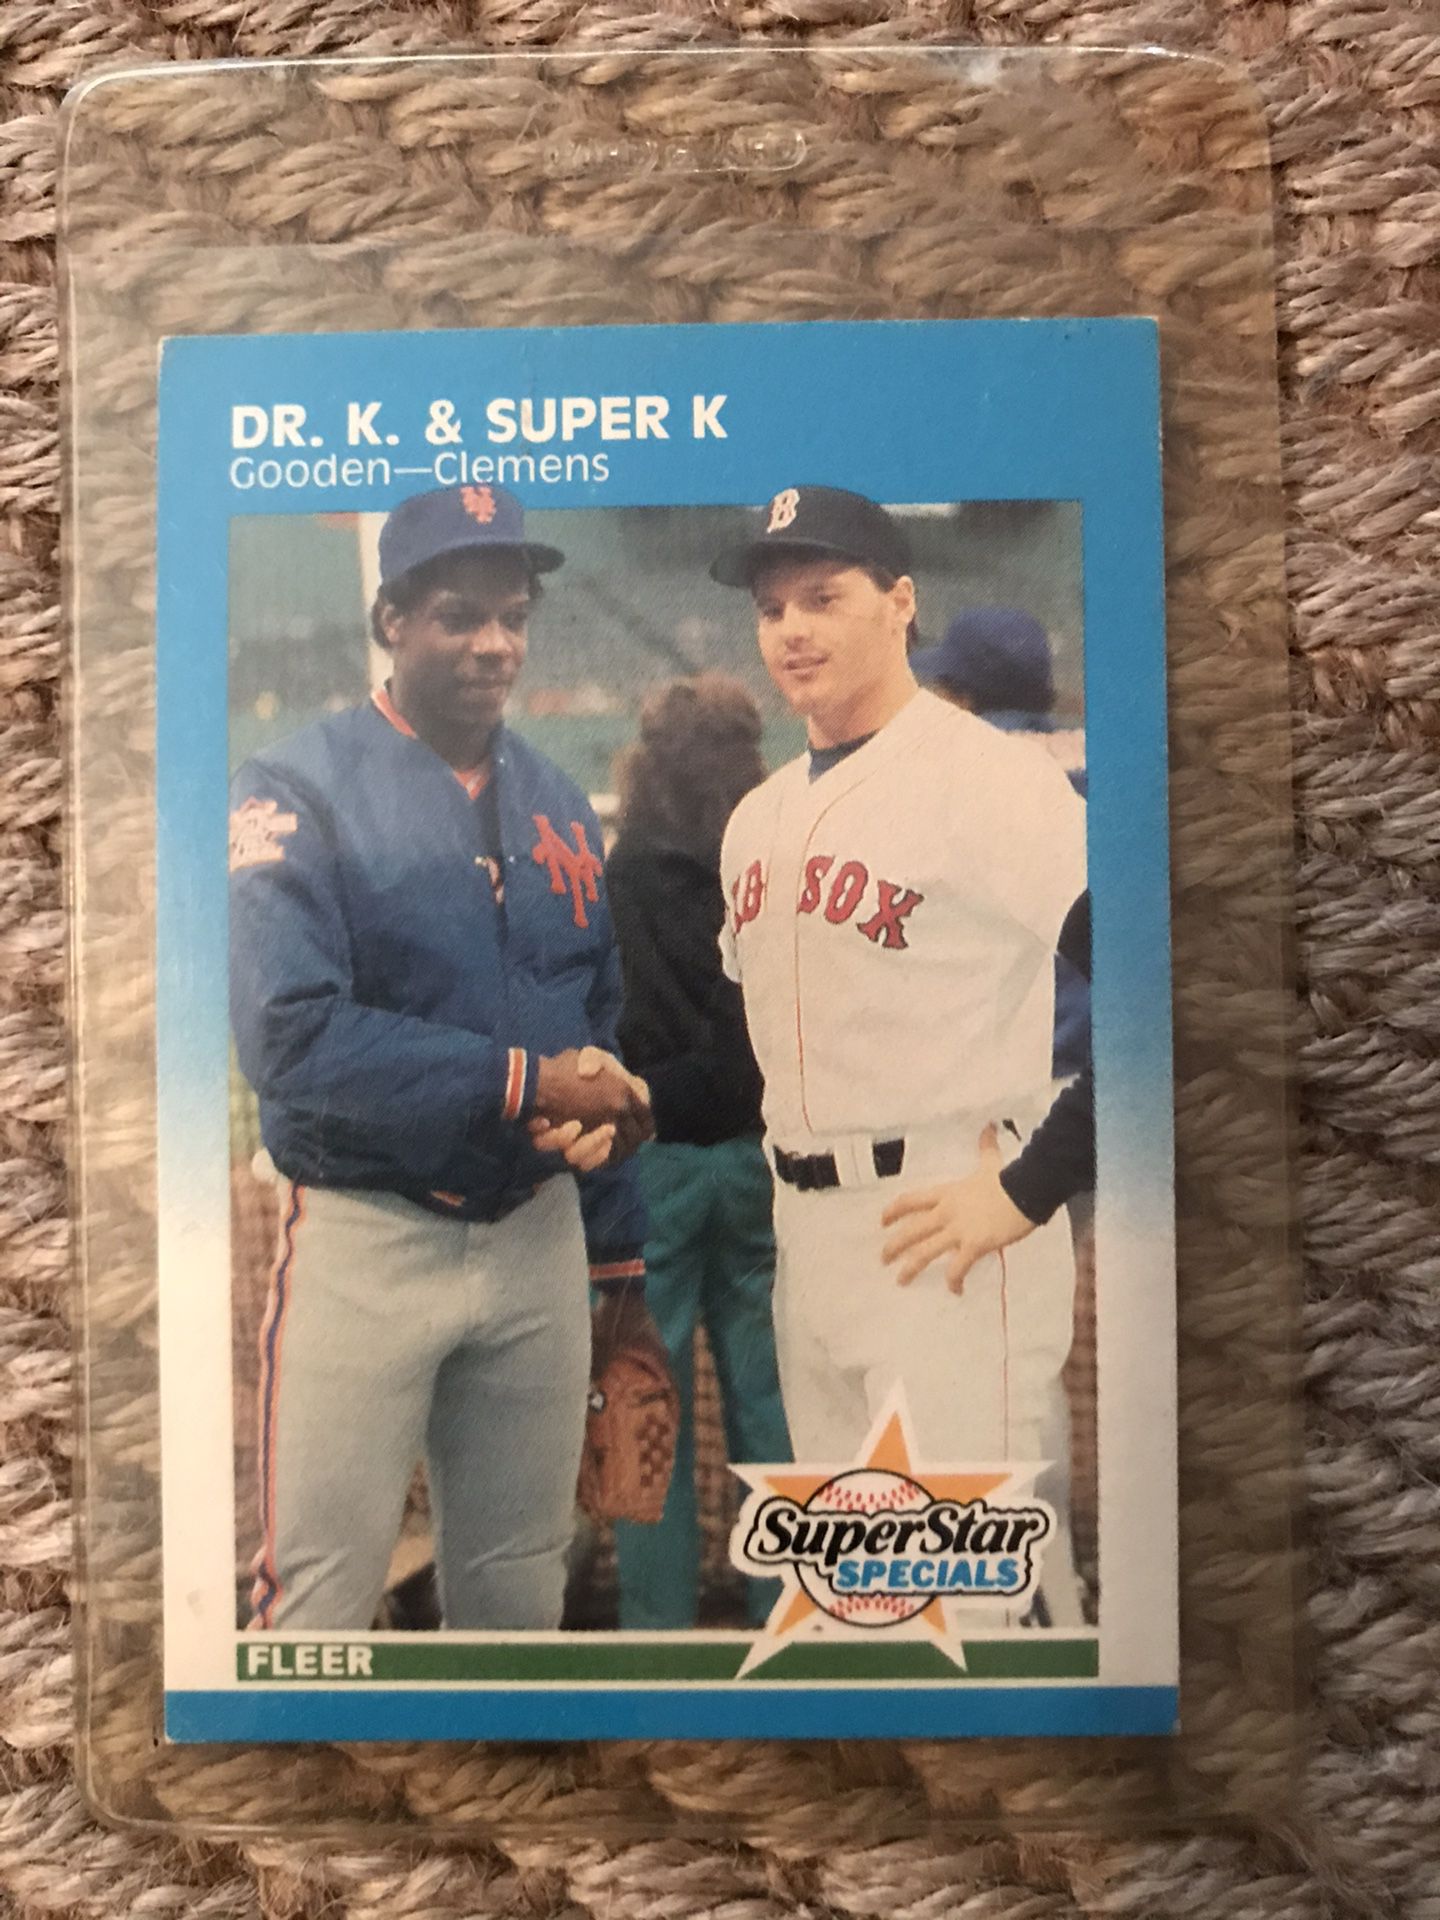 Gooden-Clemens Fleer Super Star Specials Baseball Card Mint Condition